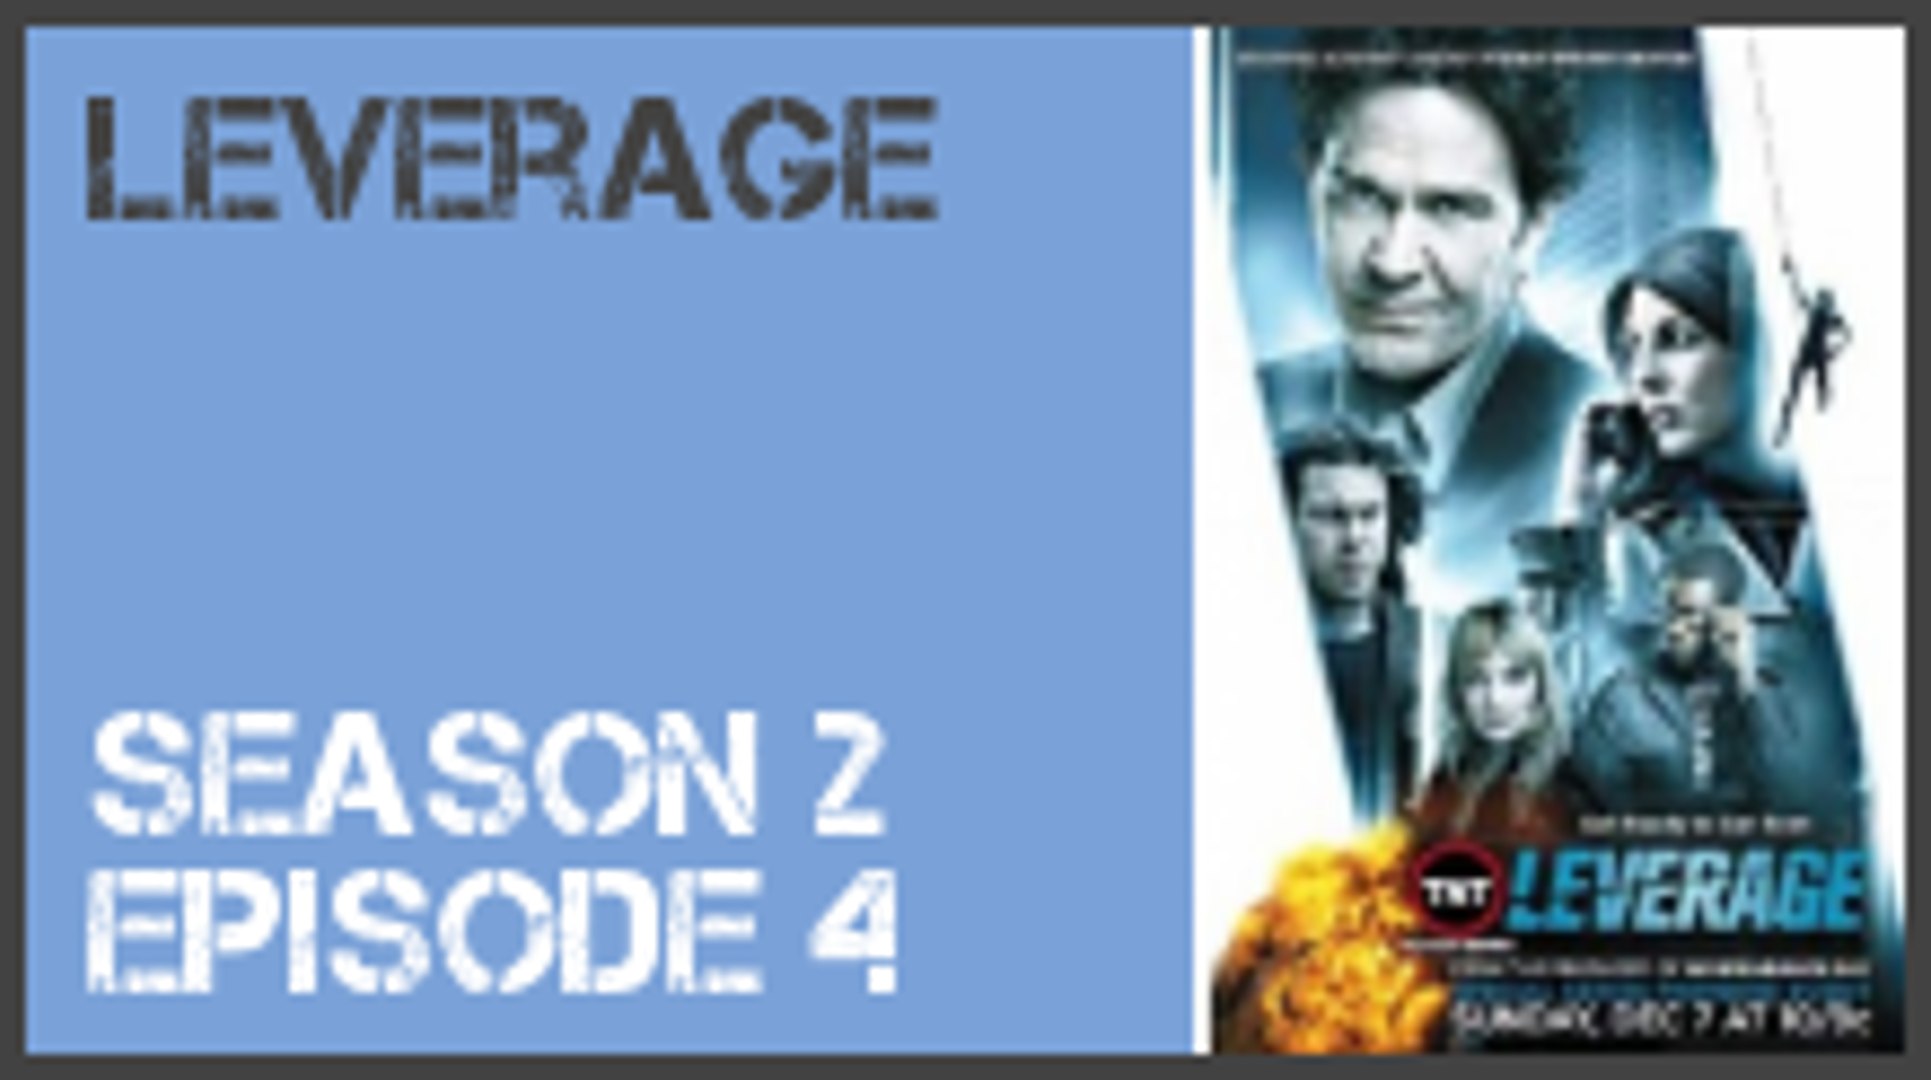 Leverage season 2 episode 4 s2e4 - Dailymotion Video